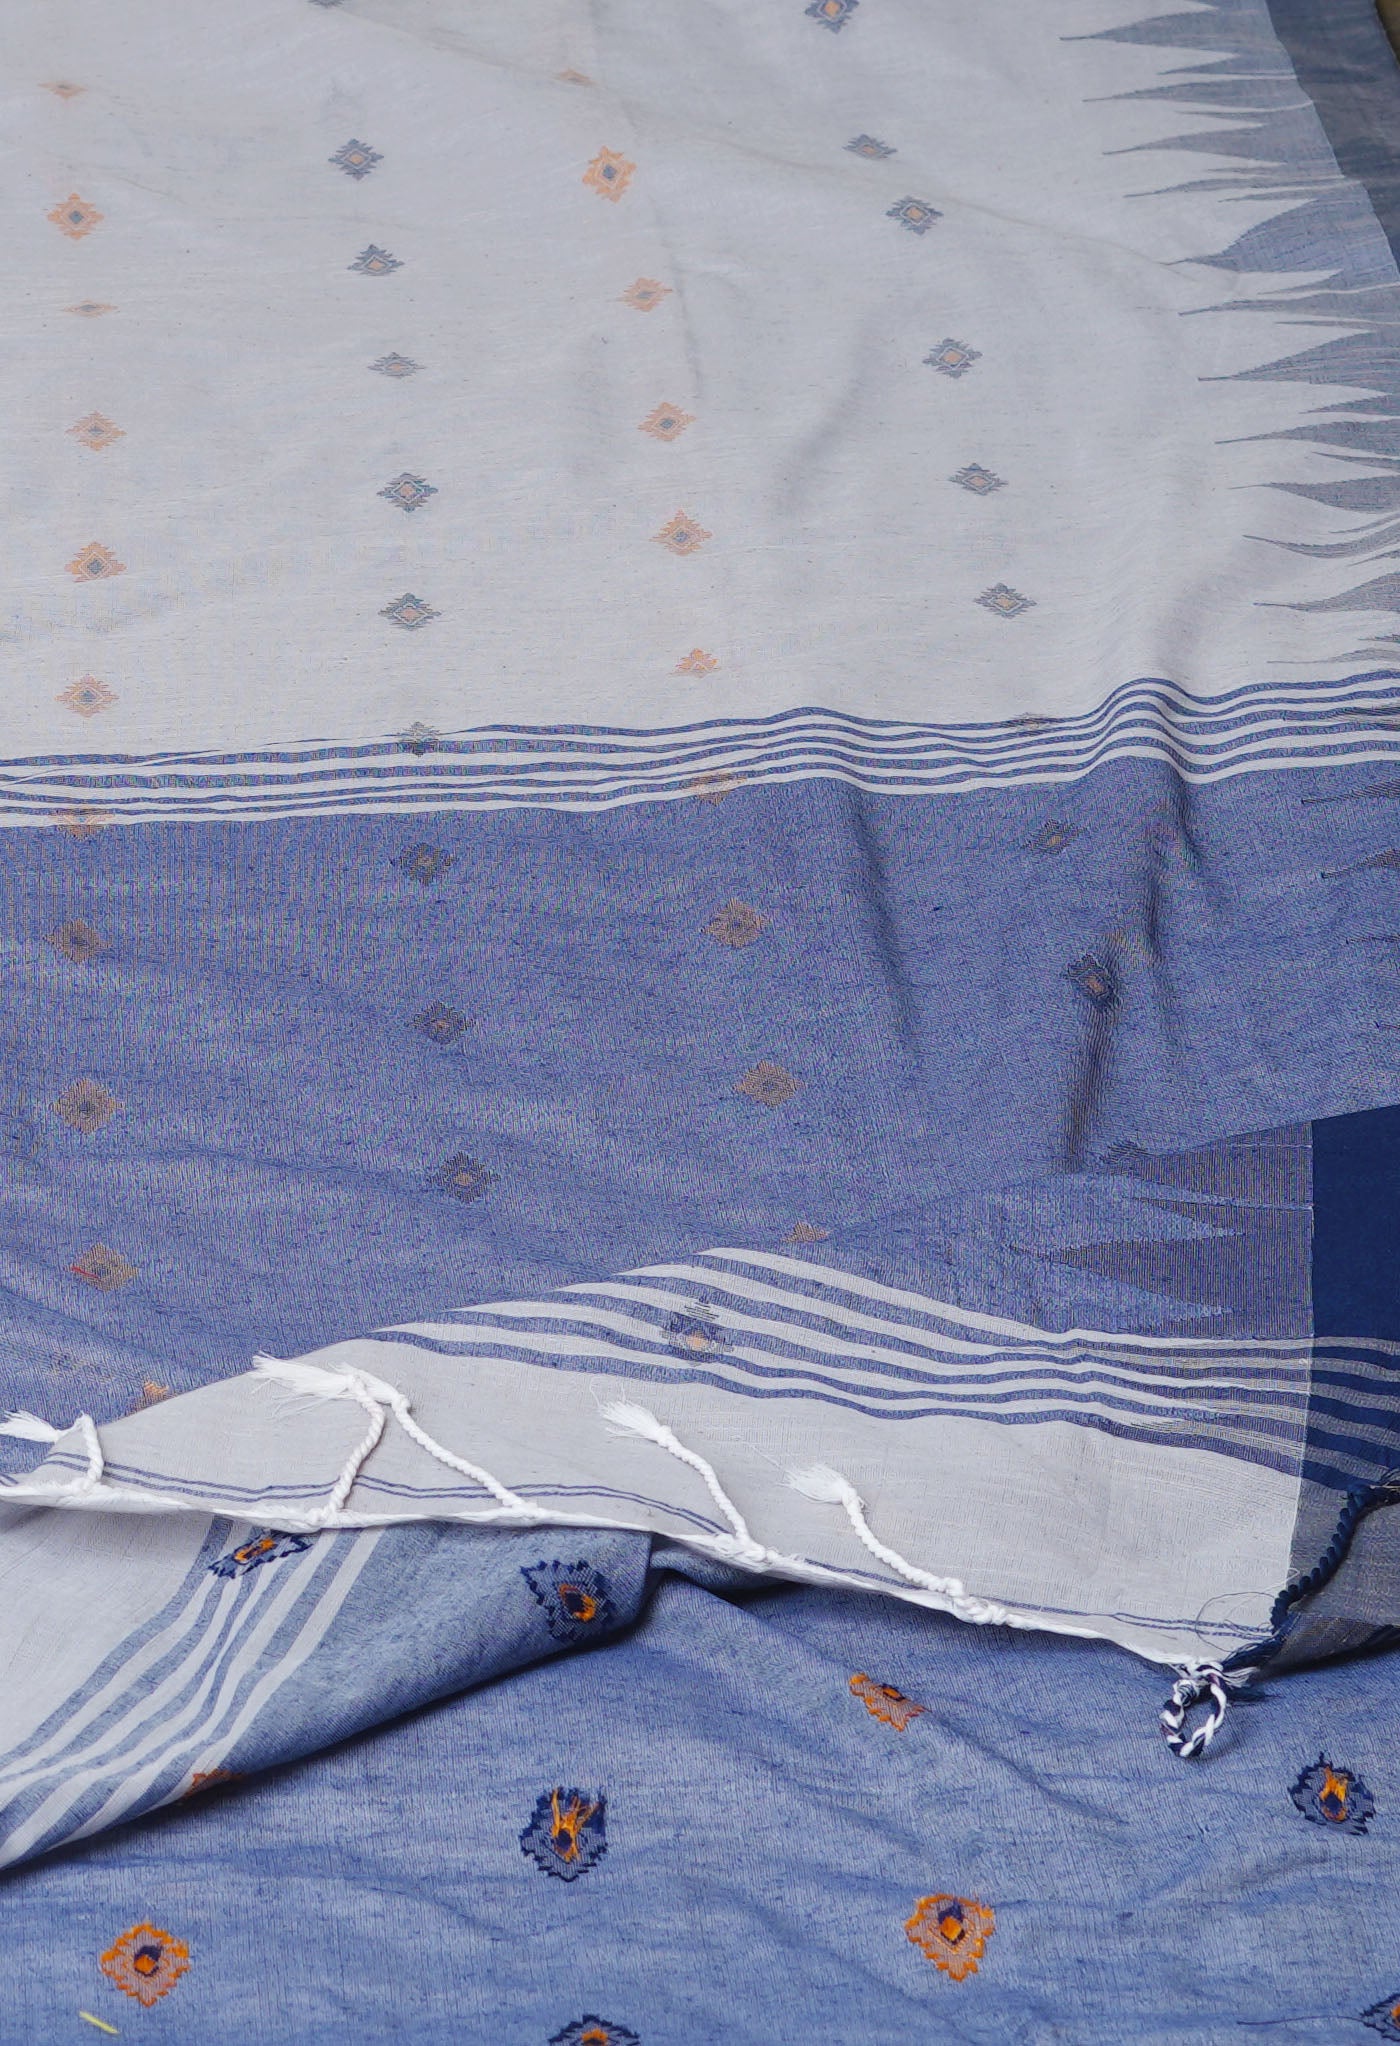 Grey Pure Handloom Bengal Cotton Linen Saree